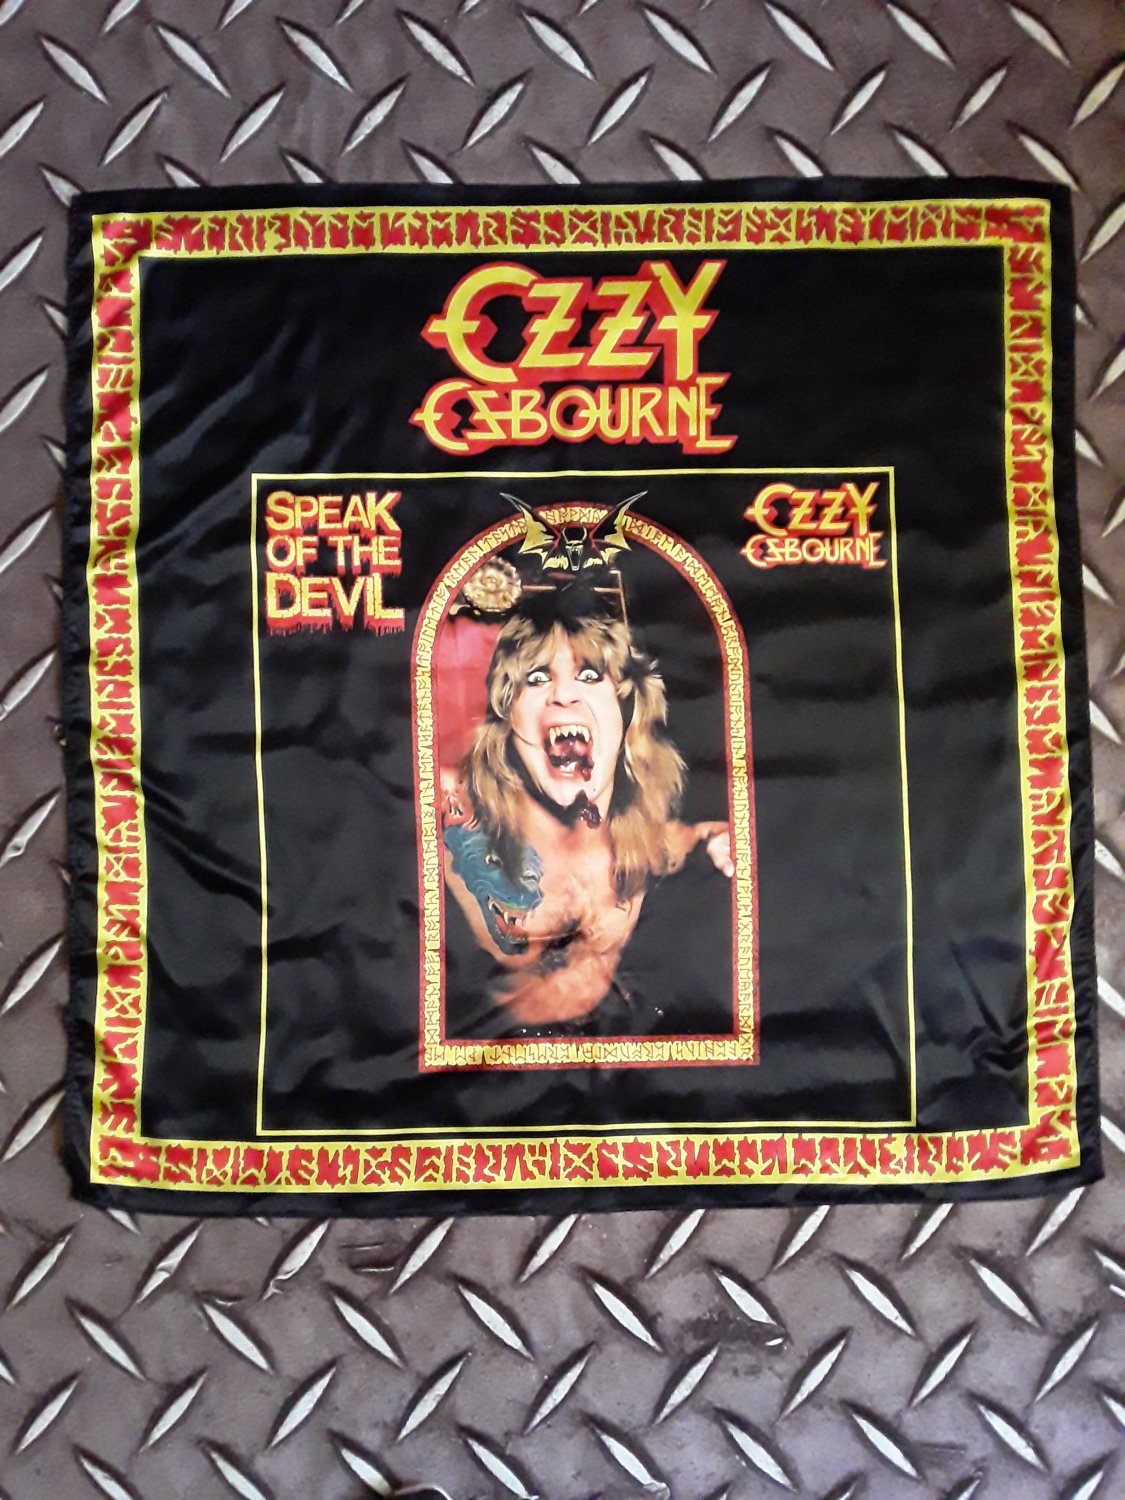 OZZY OSBOURNE - Speak of the devil FLAG cloth POSTER Banner Heavy metal Black sabbath